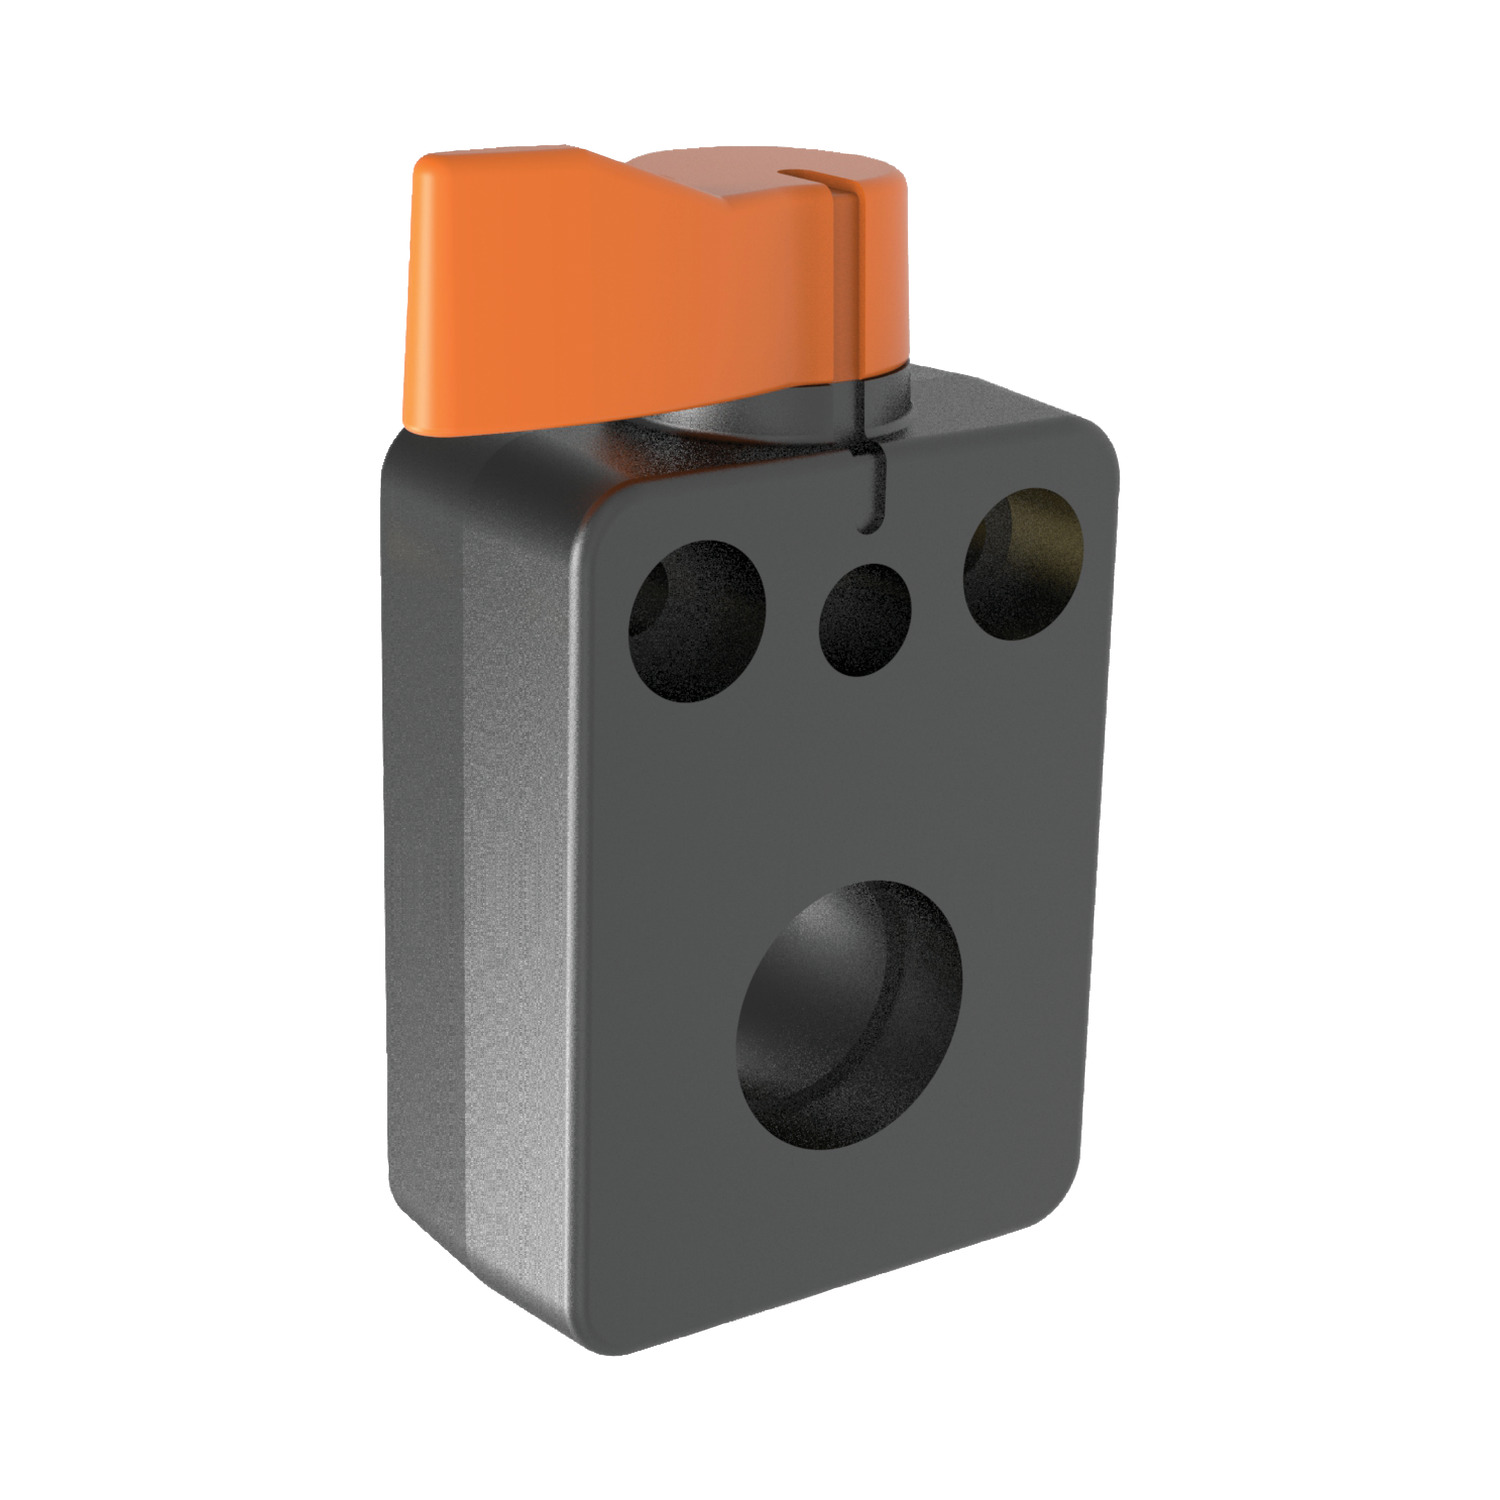 33980.W1516 One Touch Spindle Lock, Orange Handle orange handle - 16 dia - M5 EC:20192136 WG:05063055507011